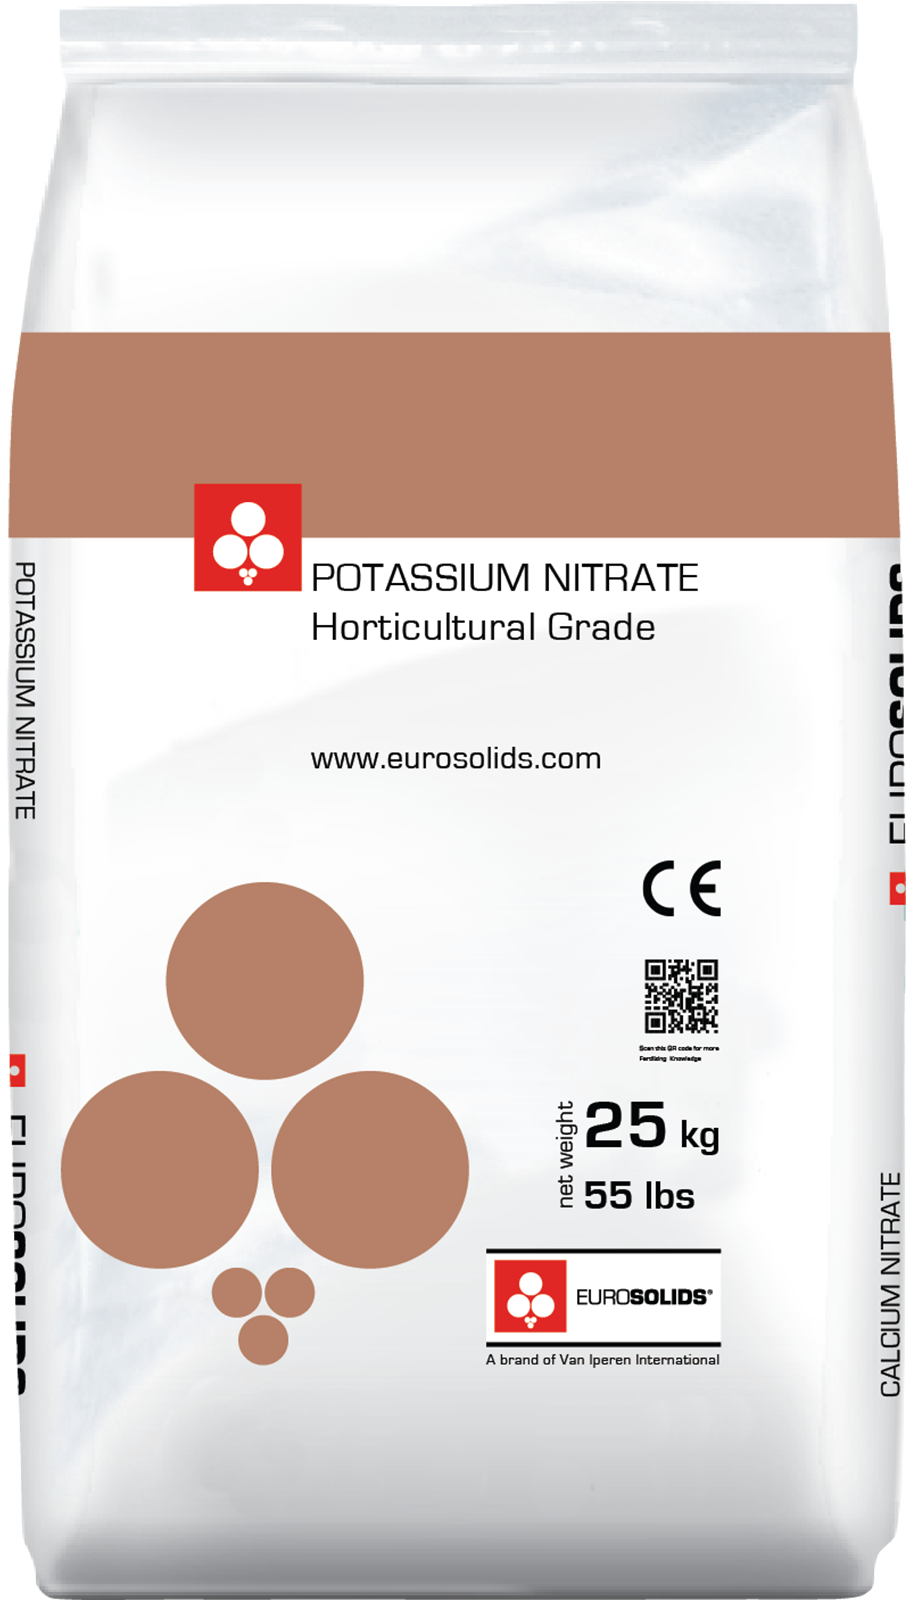 Buy Potassium Nitrate at Inoxia Ltd